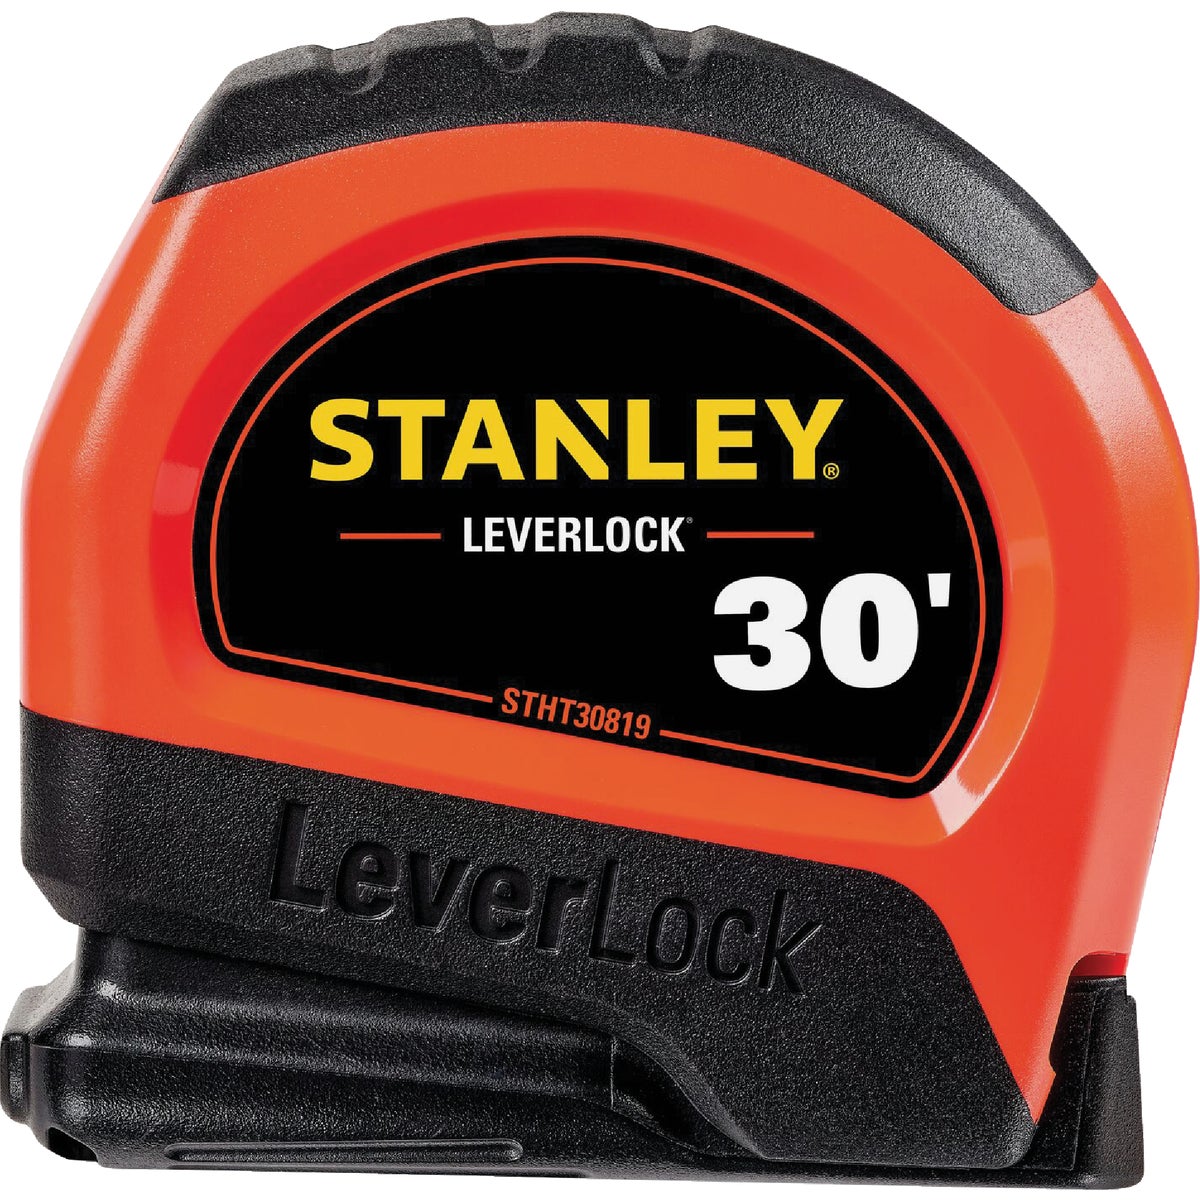 Stanley LeverLock 30 Ft. Tape Measure